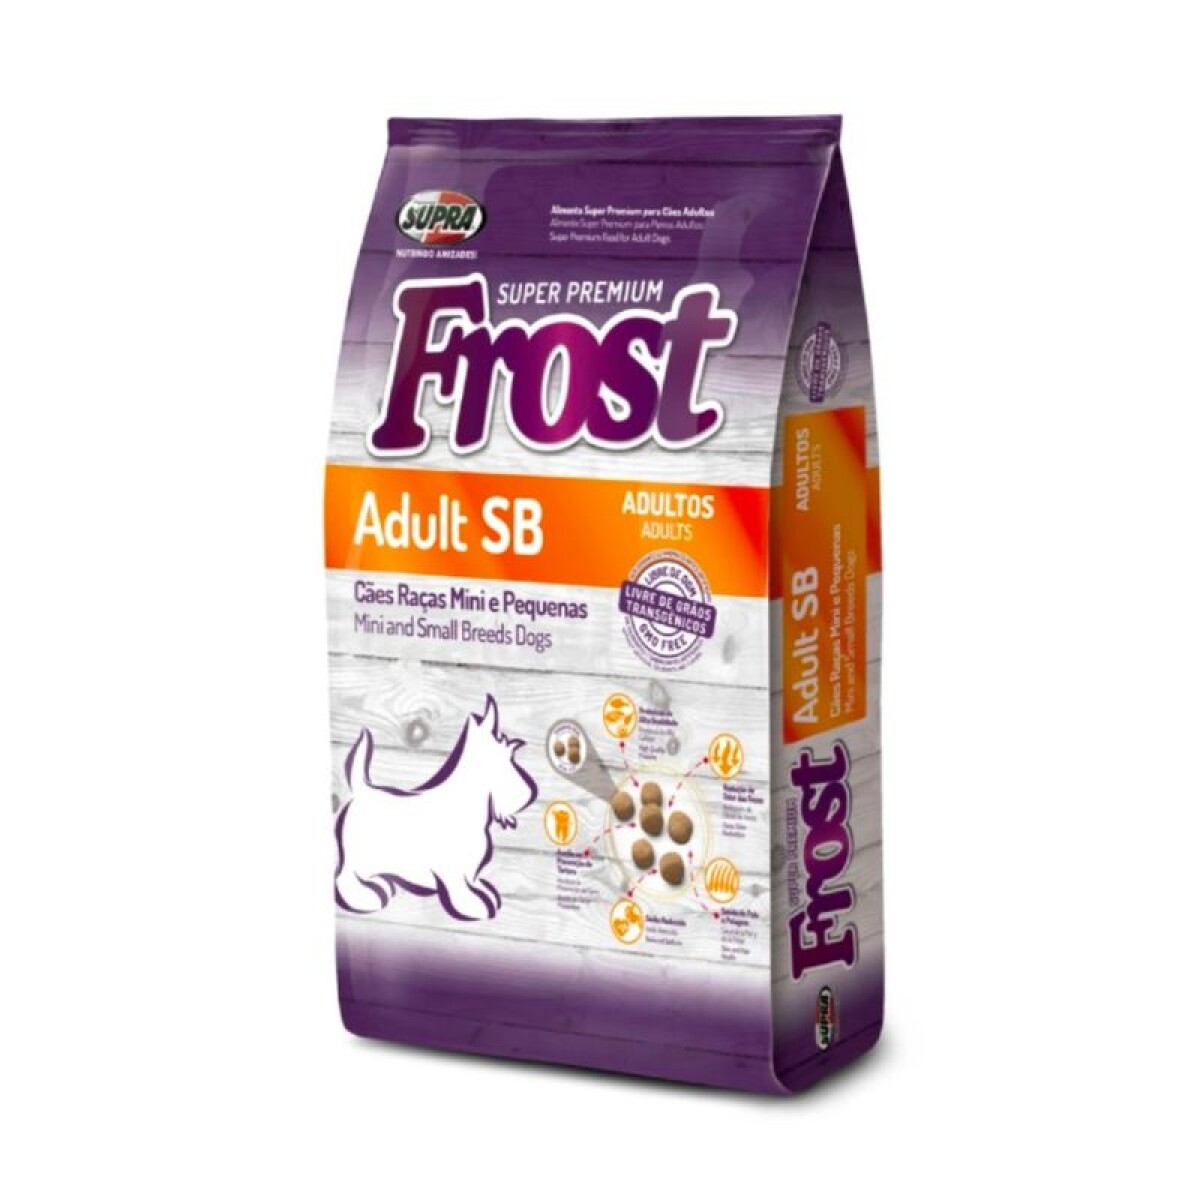 FROST ADULT SB 1 KG - Frost Adult Sb 1 Kg 